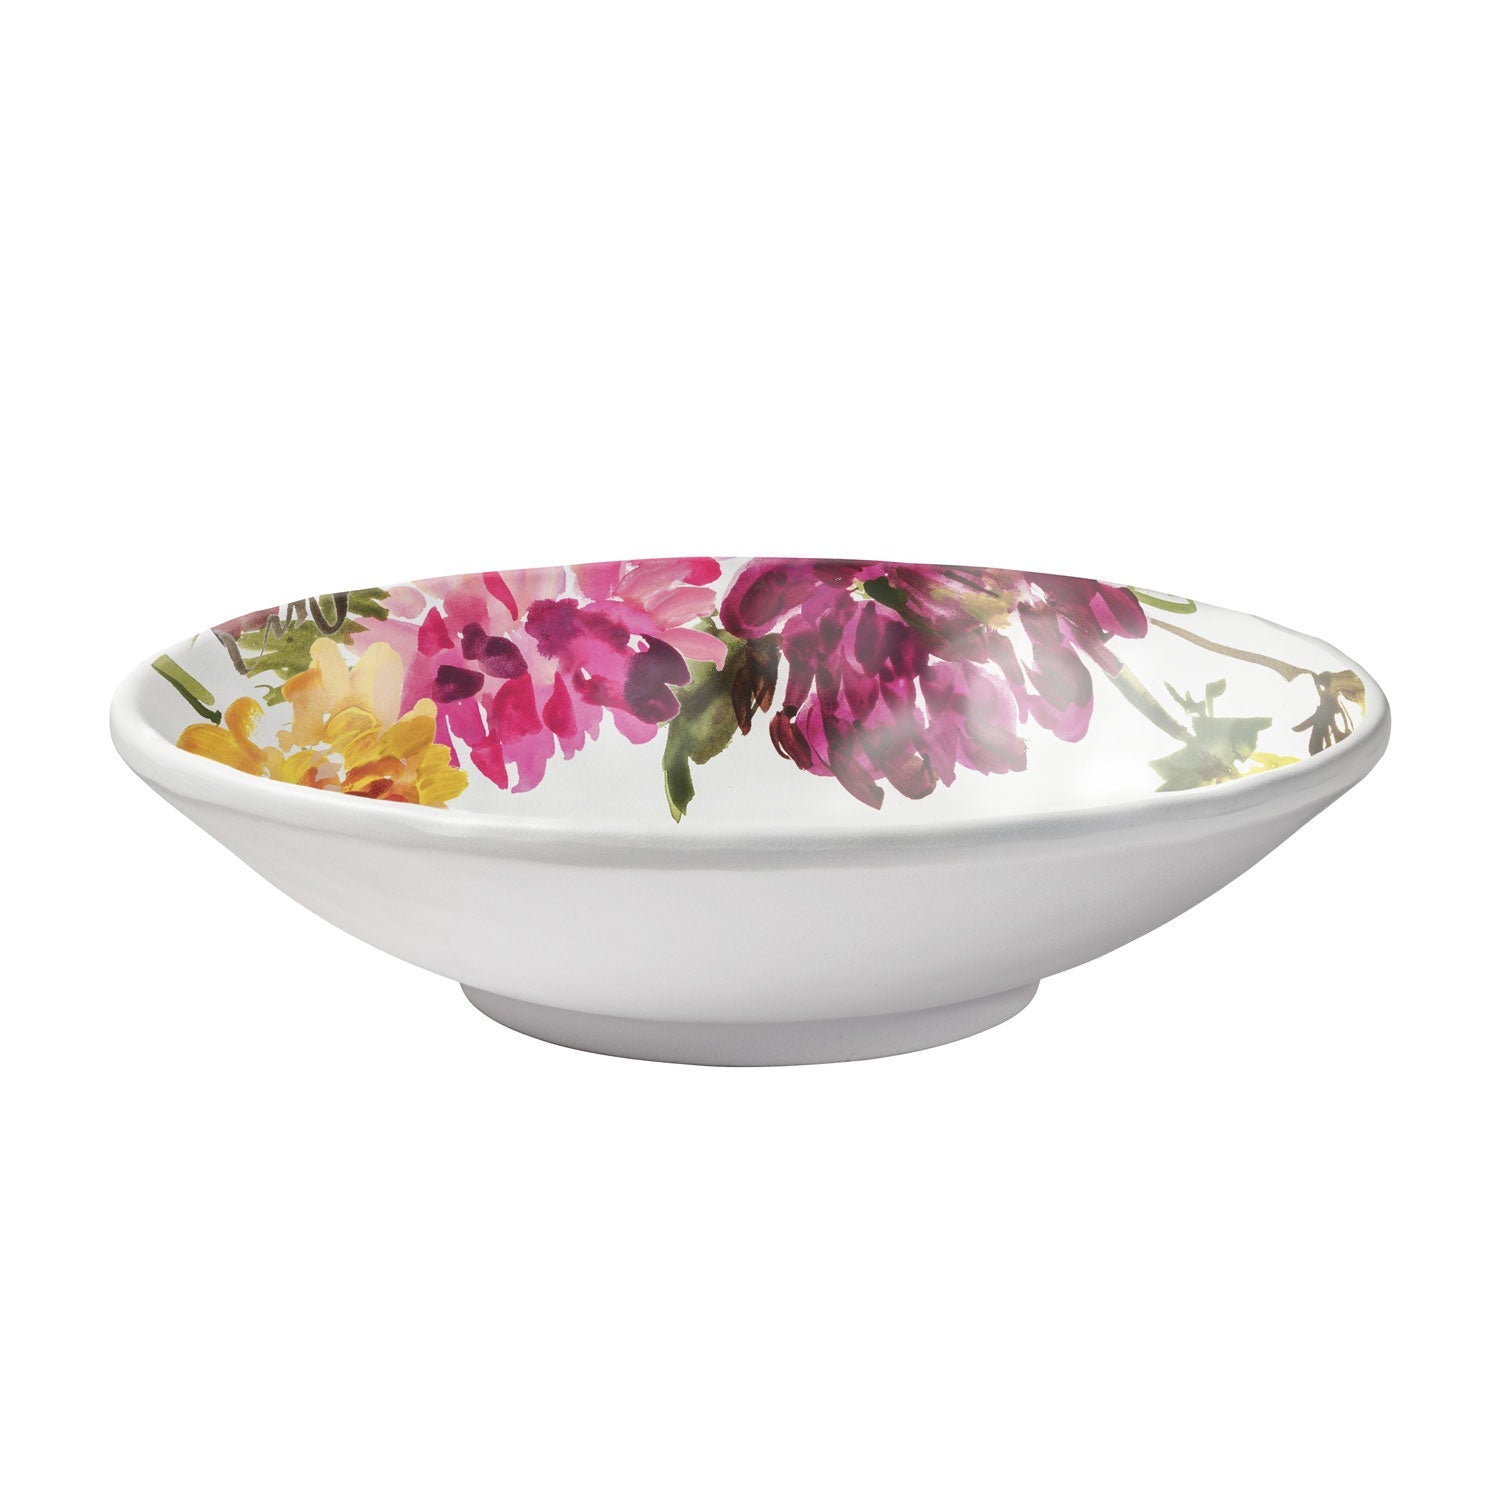 Merritt Designs Kelly Ventura Garden Brights 8 inch White Melamine Salad Bowl